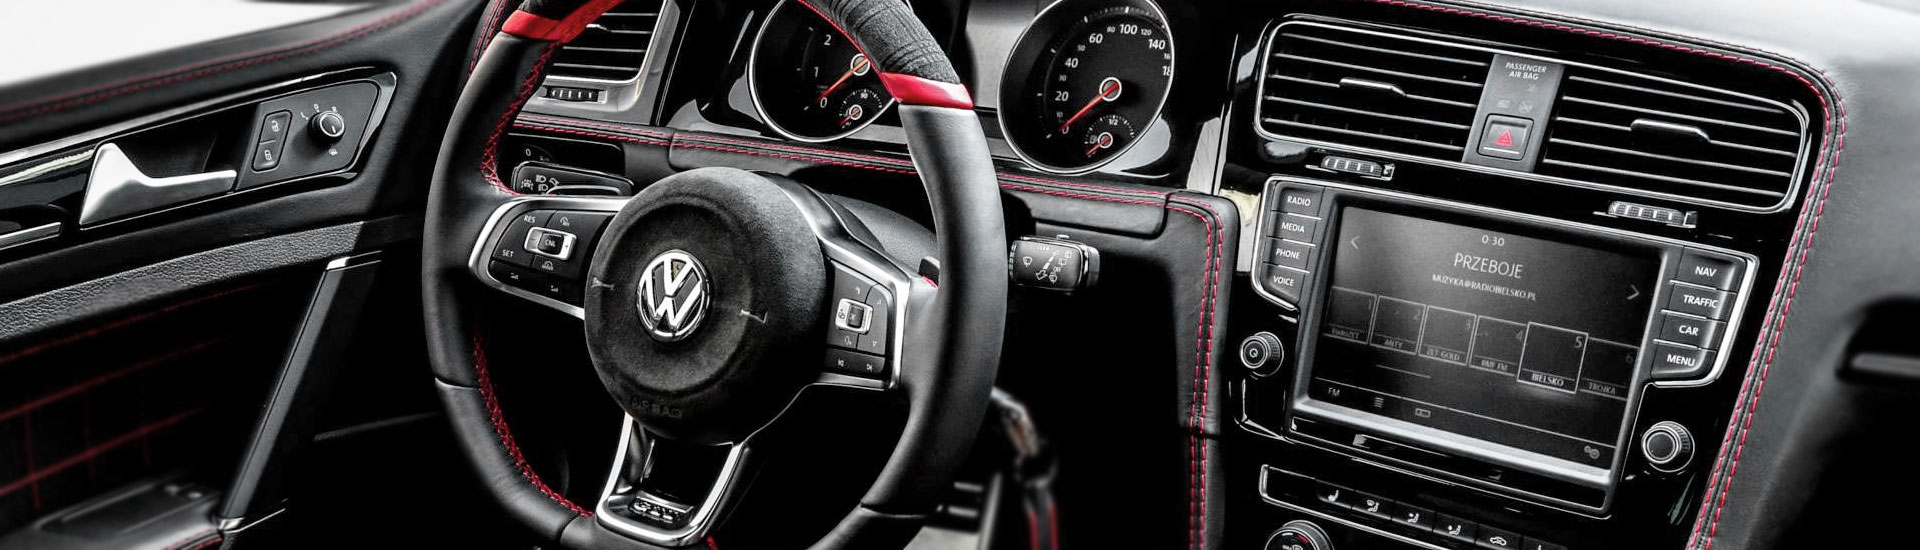 2014 Volkswagen Touareg Custom Dash Kits